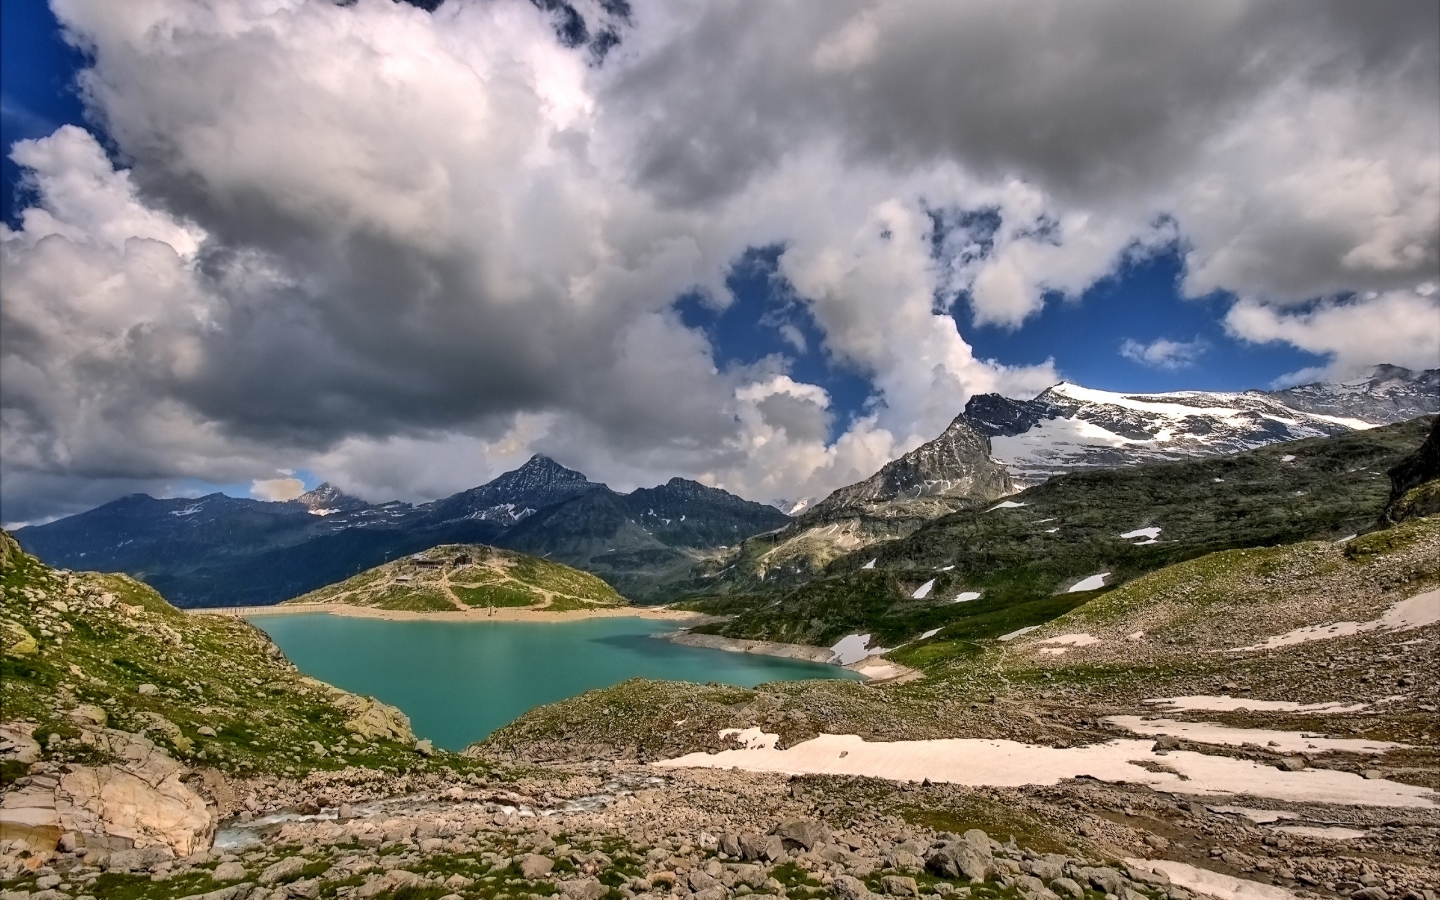 High Alpine Landscape for 1440 x 900 widescreen resolution